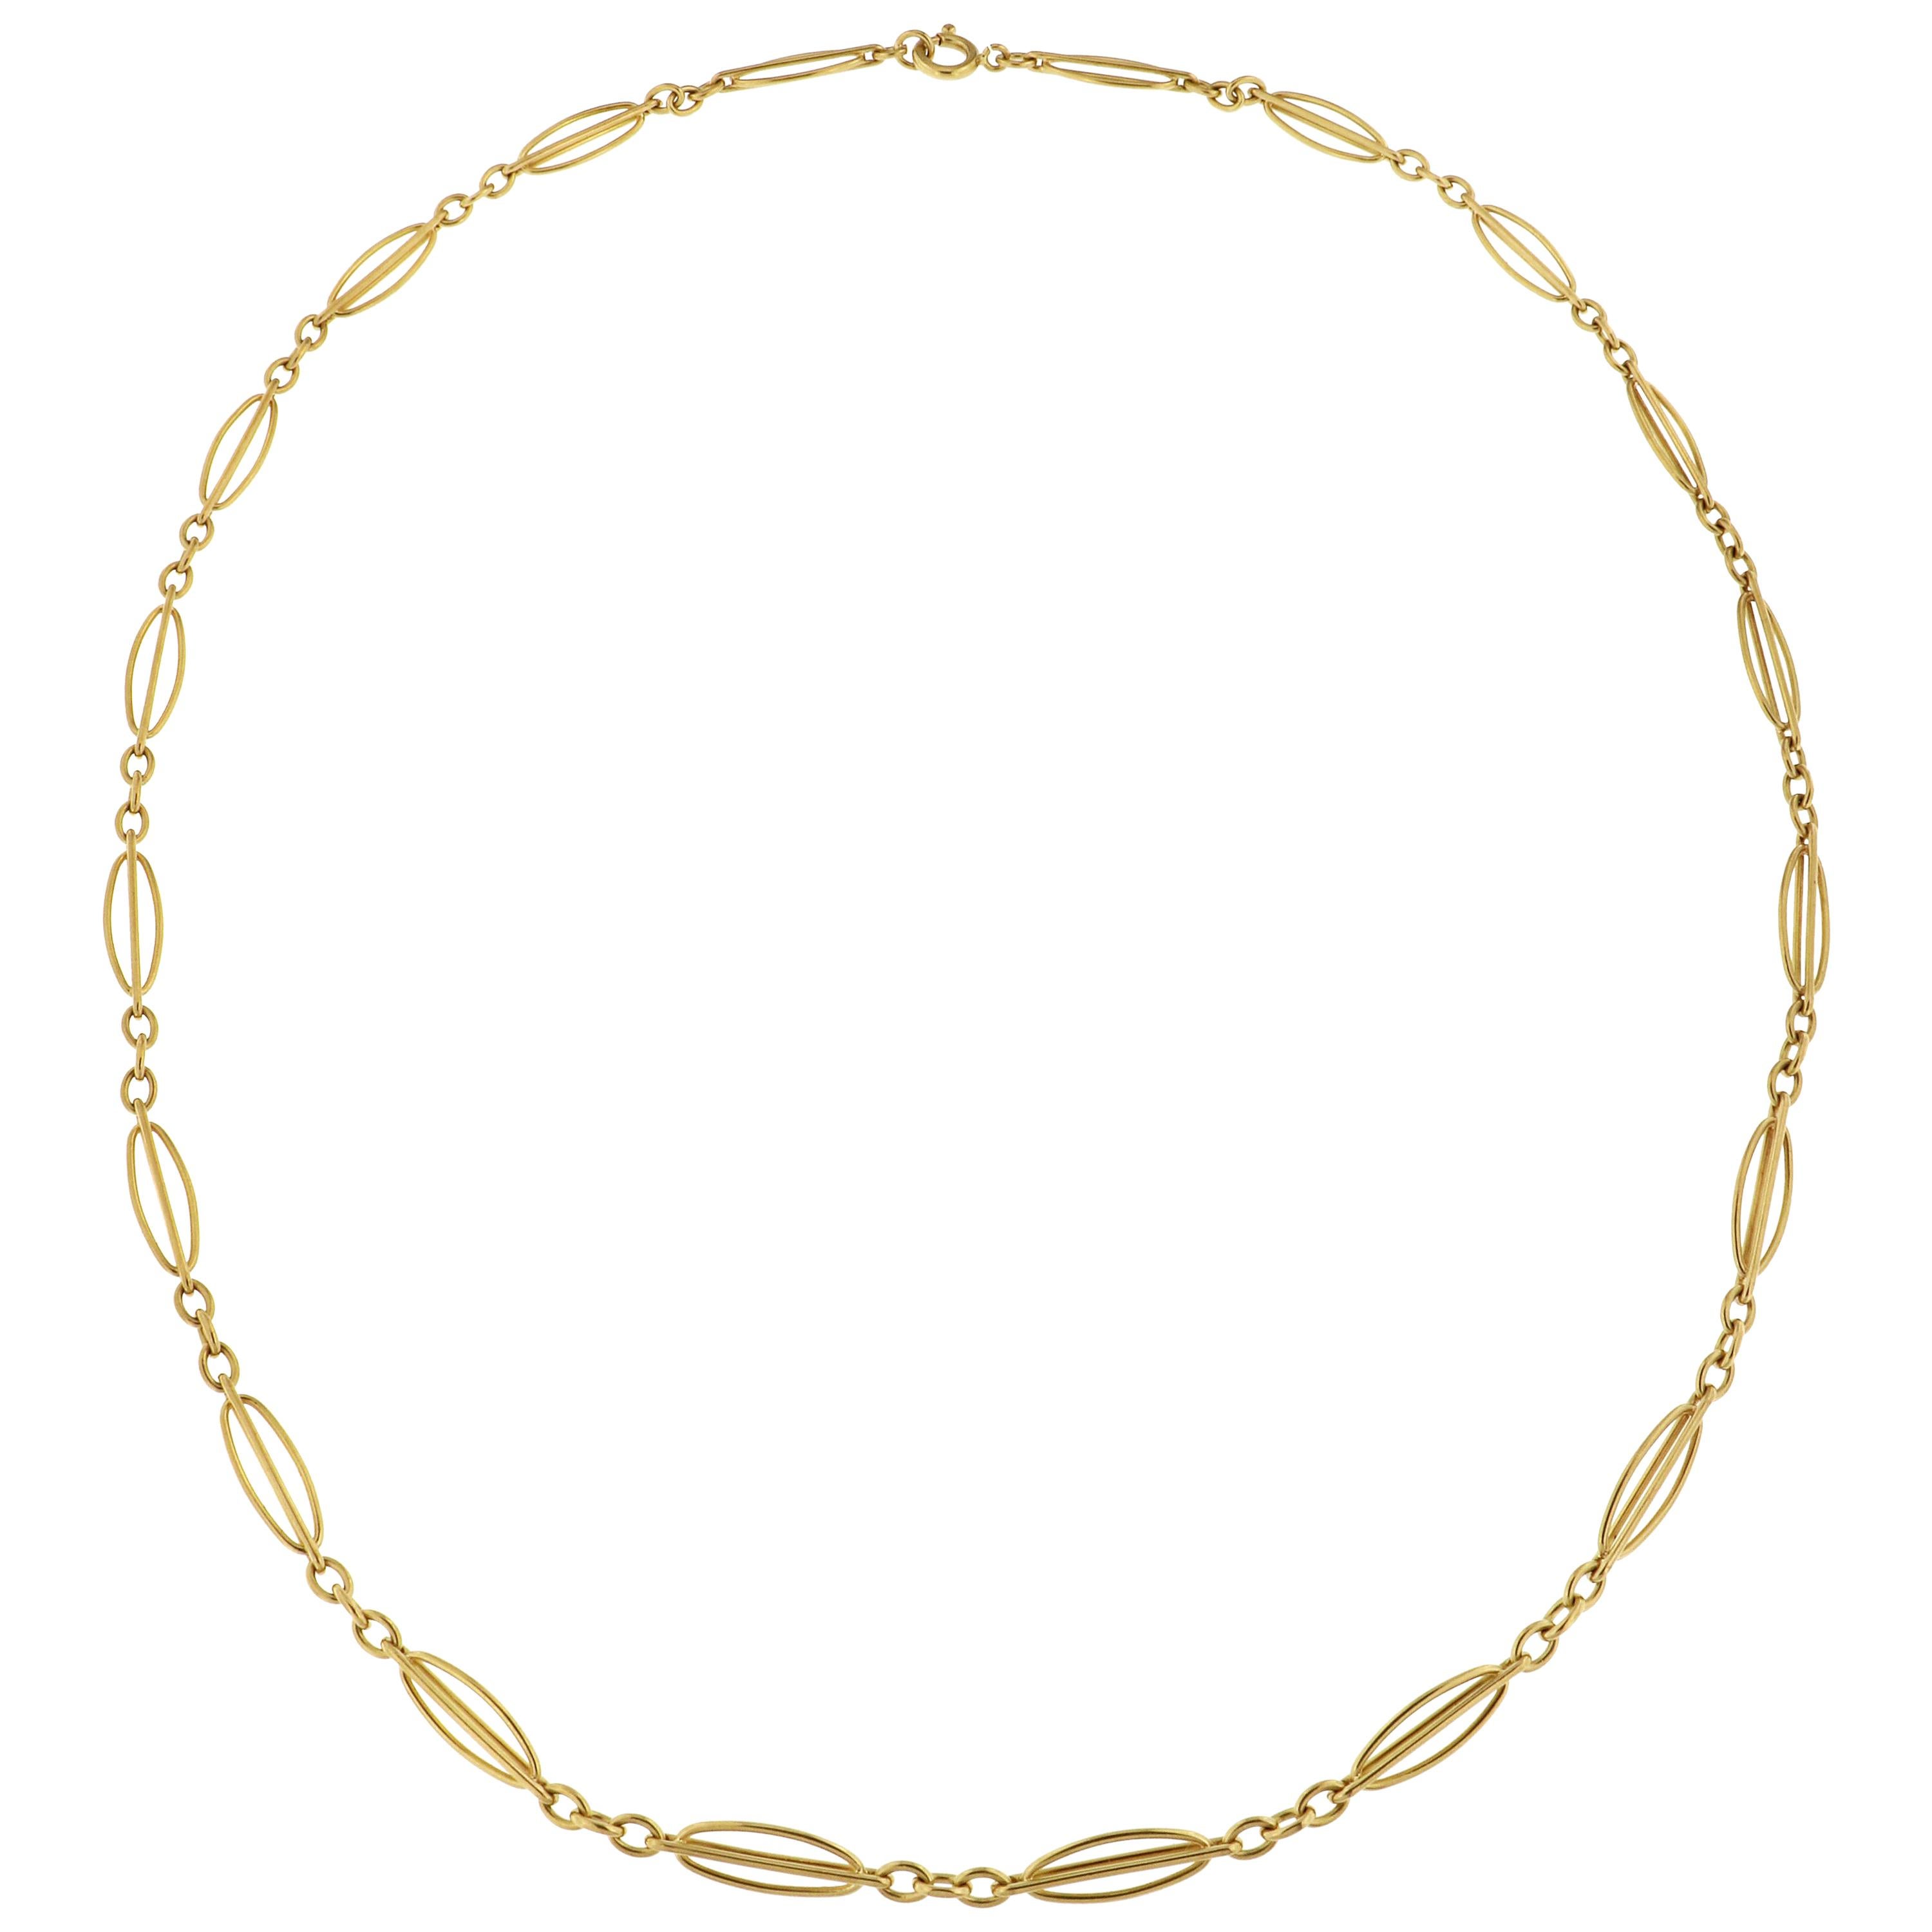 1970s Chain Necklaces